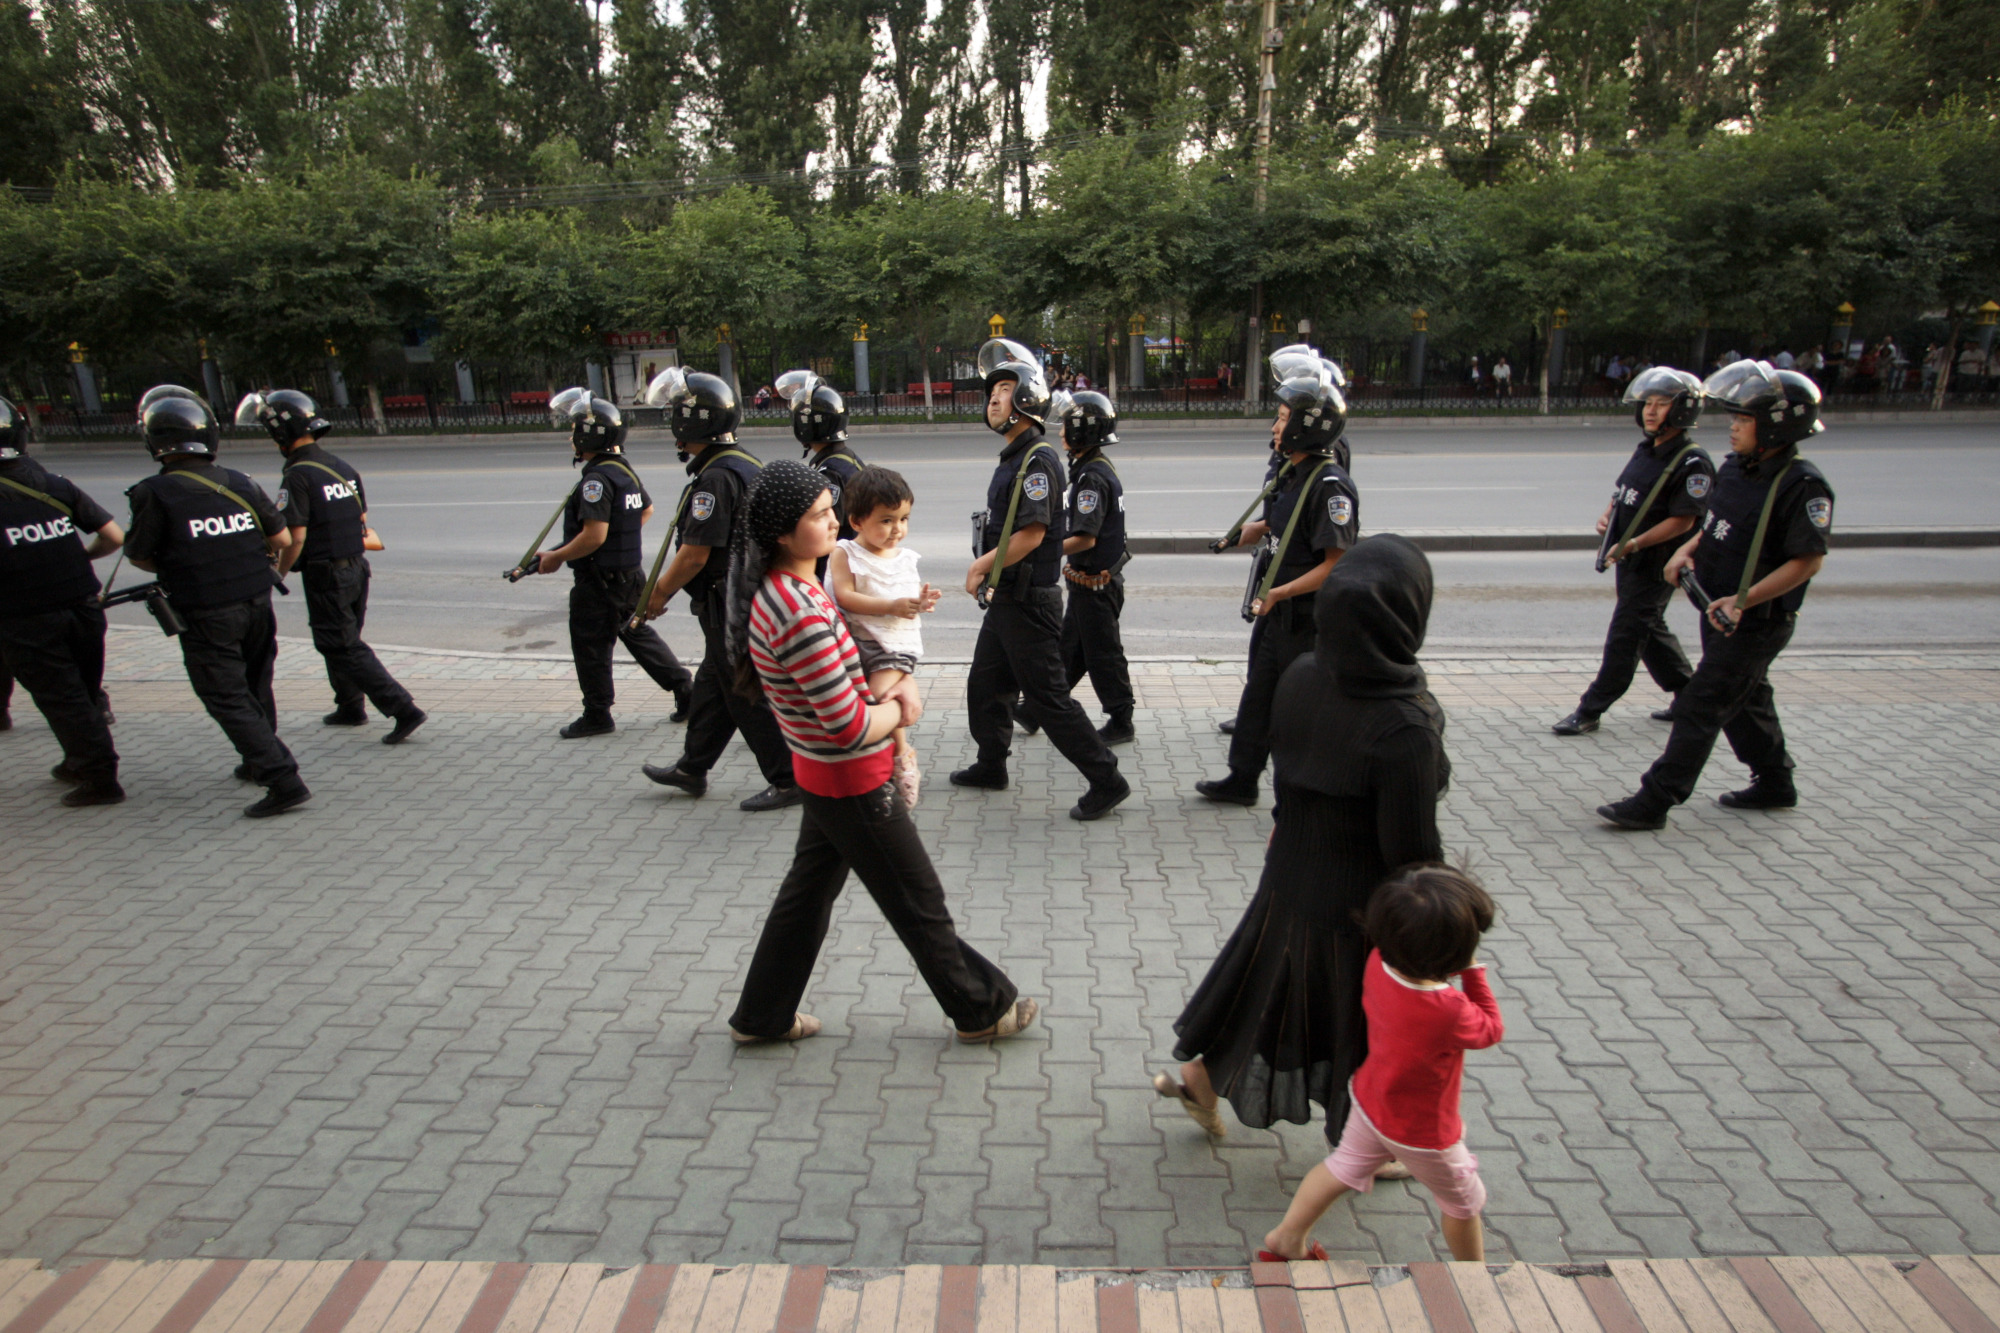 Paramilitary police patrol a Uighur neighborhood in Urumqi, Xinjiang province, China, in July 2009. | BLOOMBERG NEWS